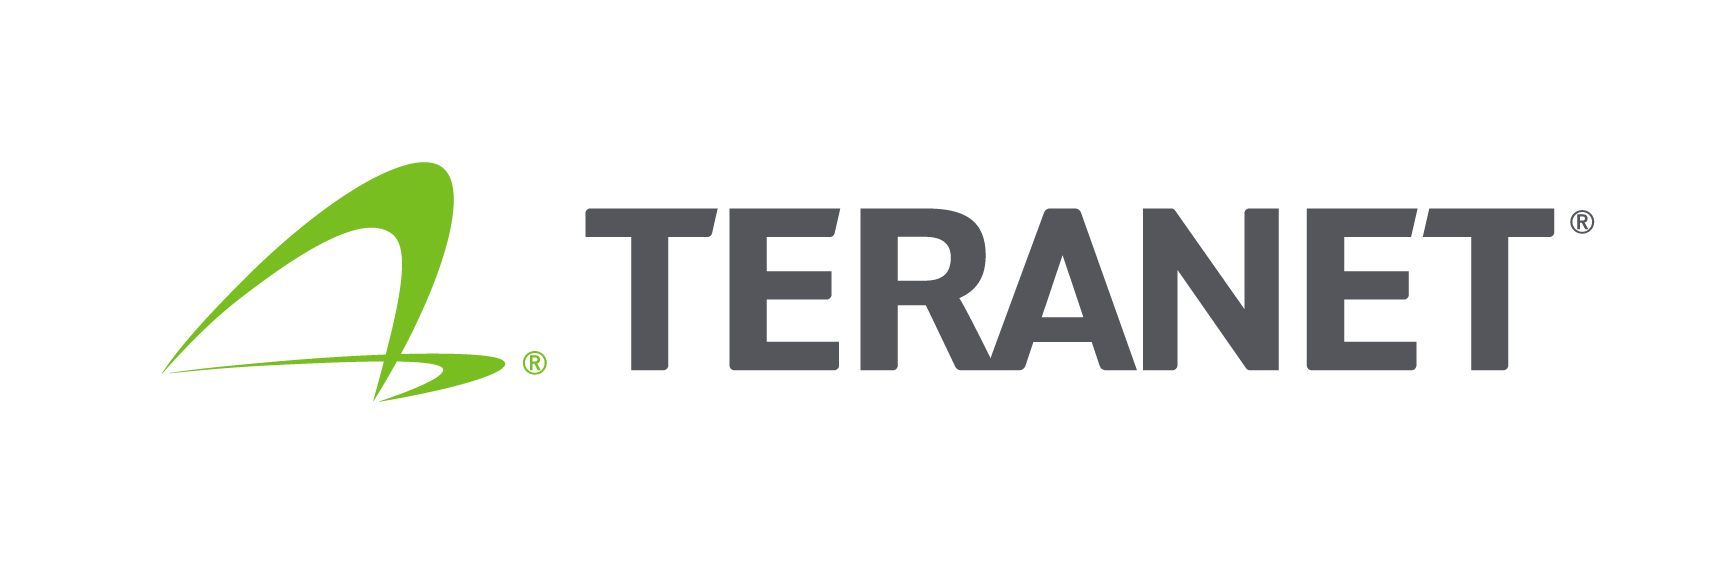 Teranet Inc.